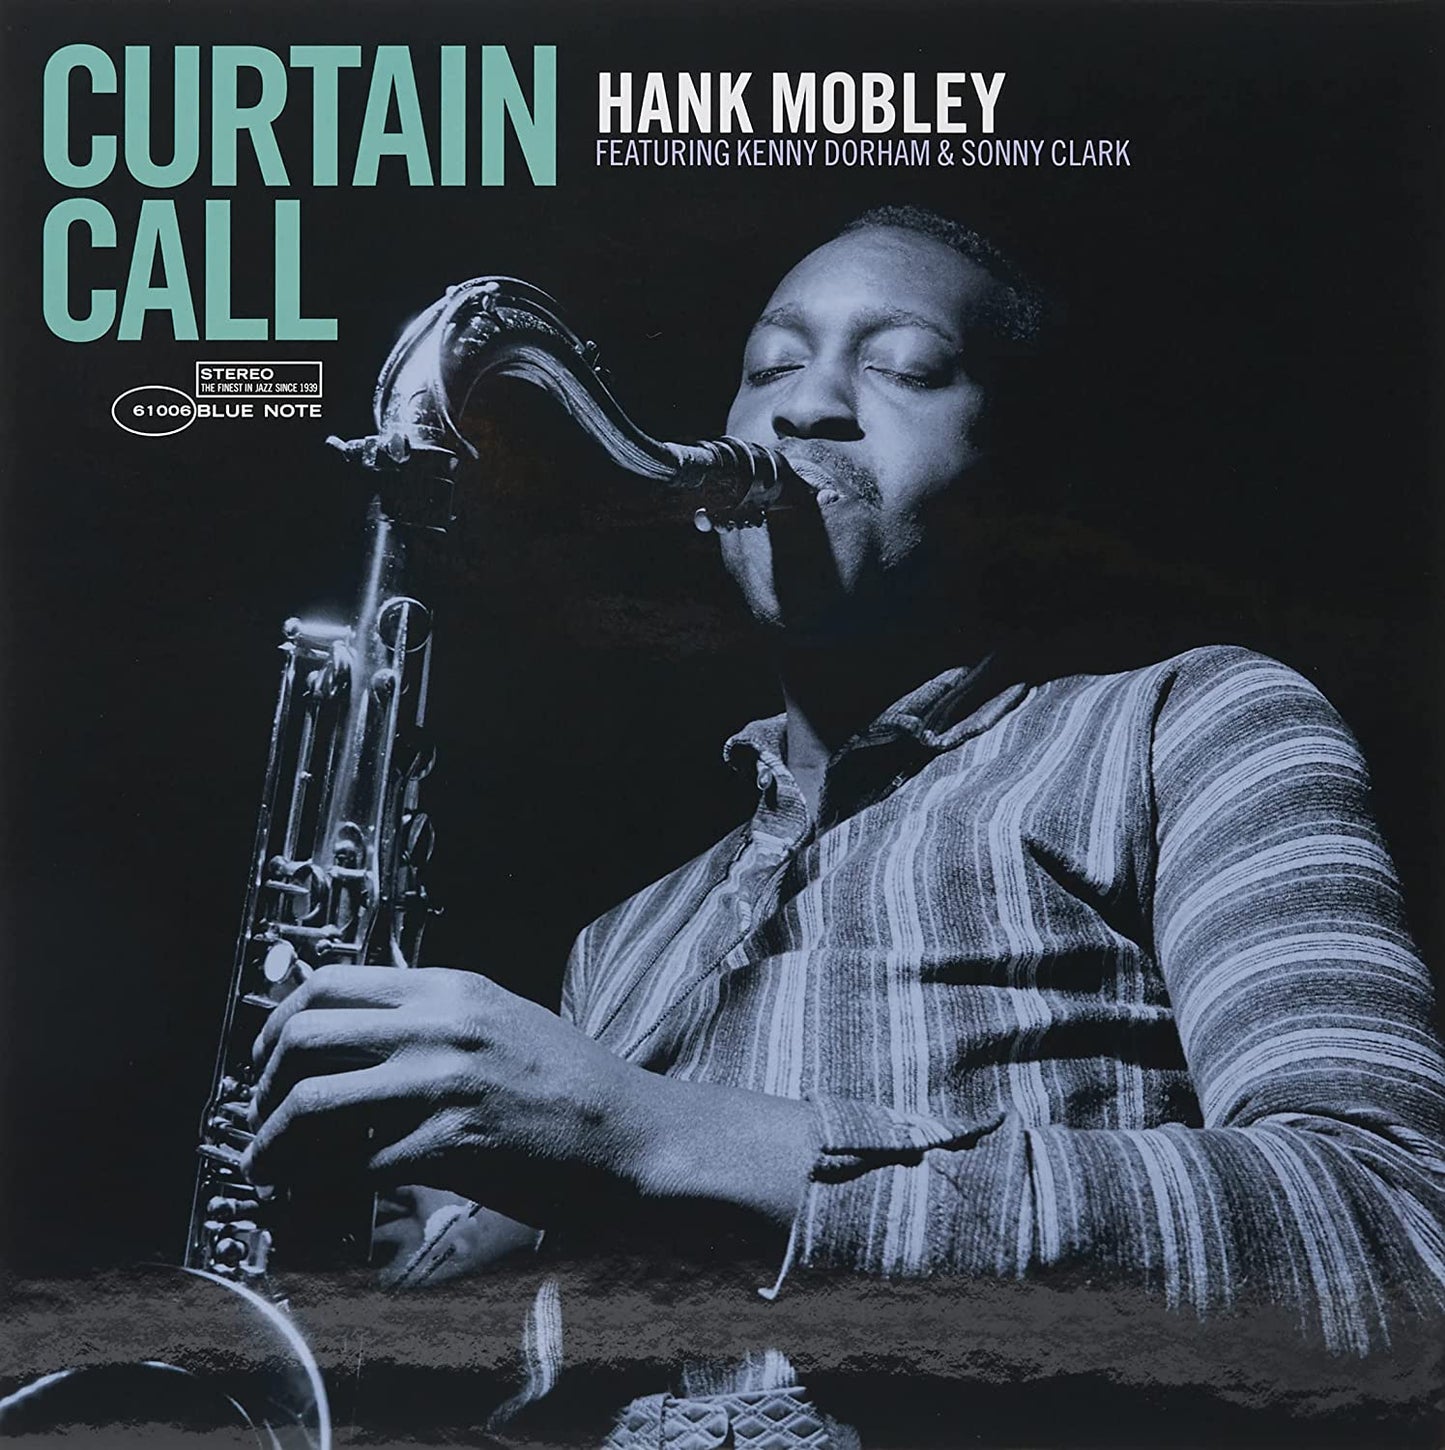 Hank Mobley - Curtain Call LP